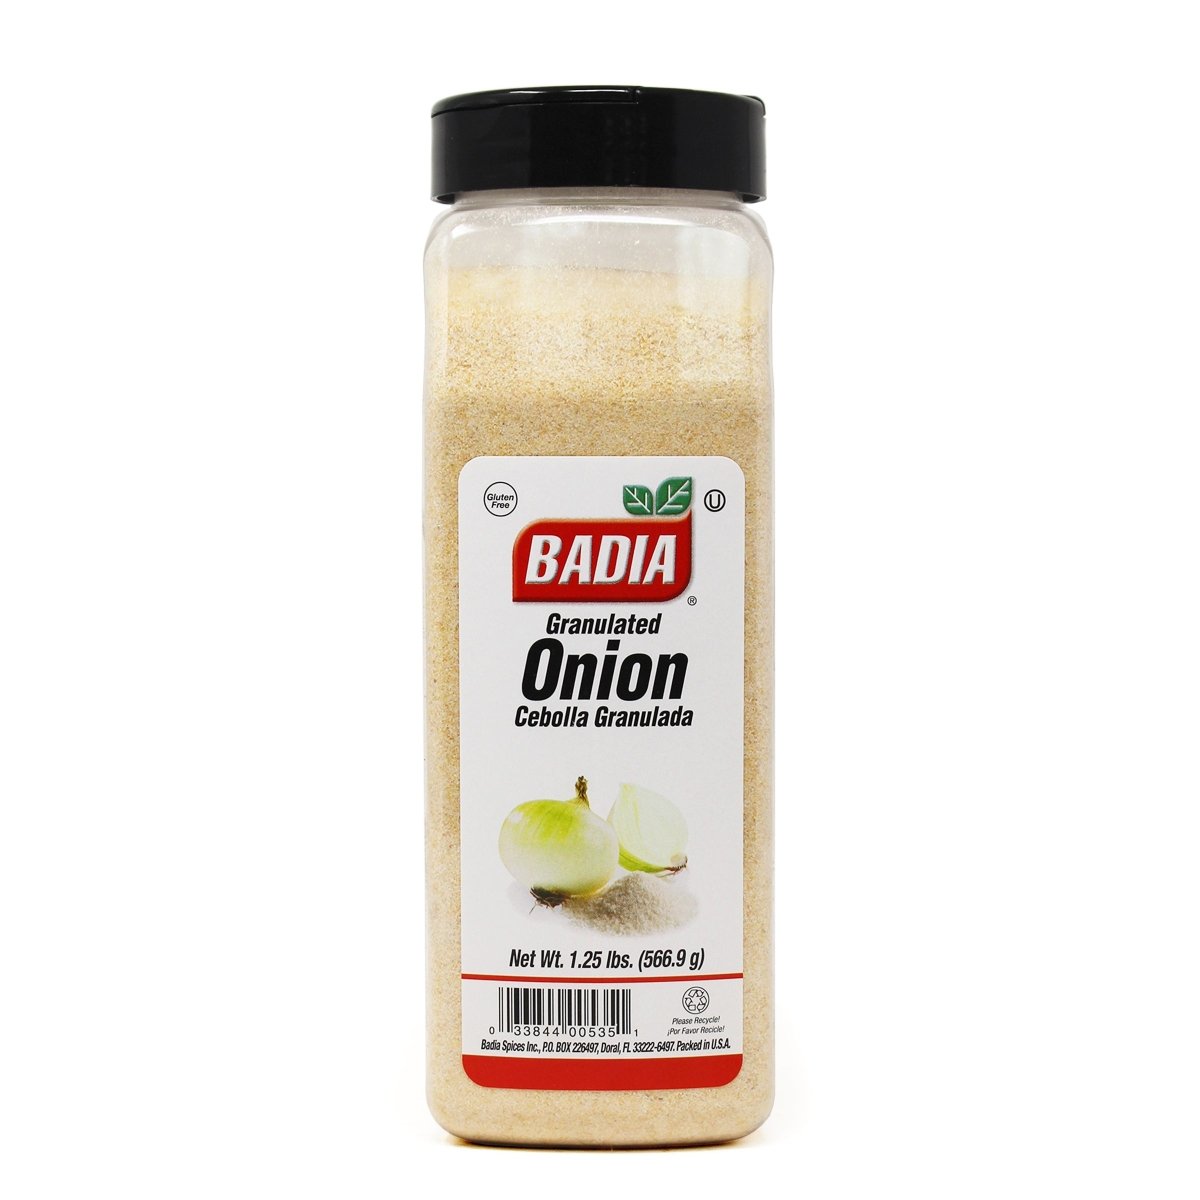 Badia Granulated Onion 1.25 lbs 00535 - Texas Star Grill Shop 535